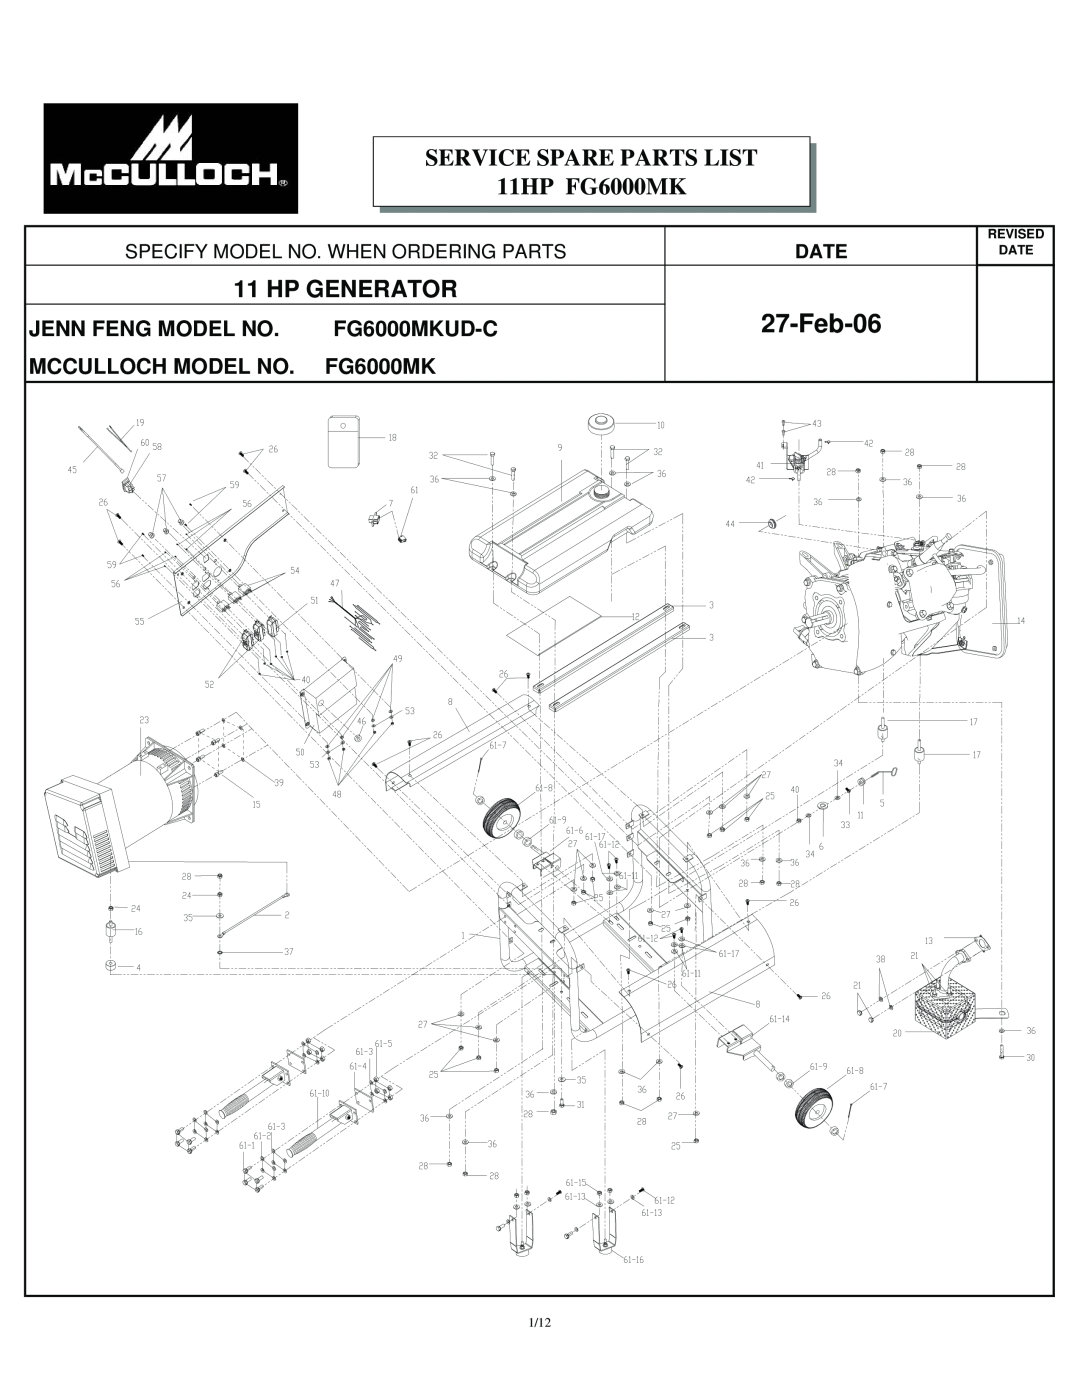 McCulloch FG6000MKUD-C manual Hp Generator, Jenn Feng Model No, Mcculloch Model No, Specify Model No. When Ordering Parts 